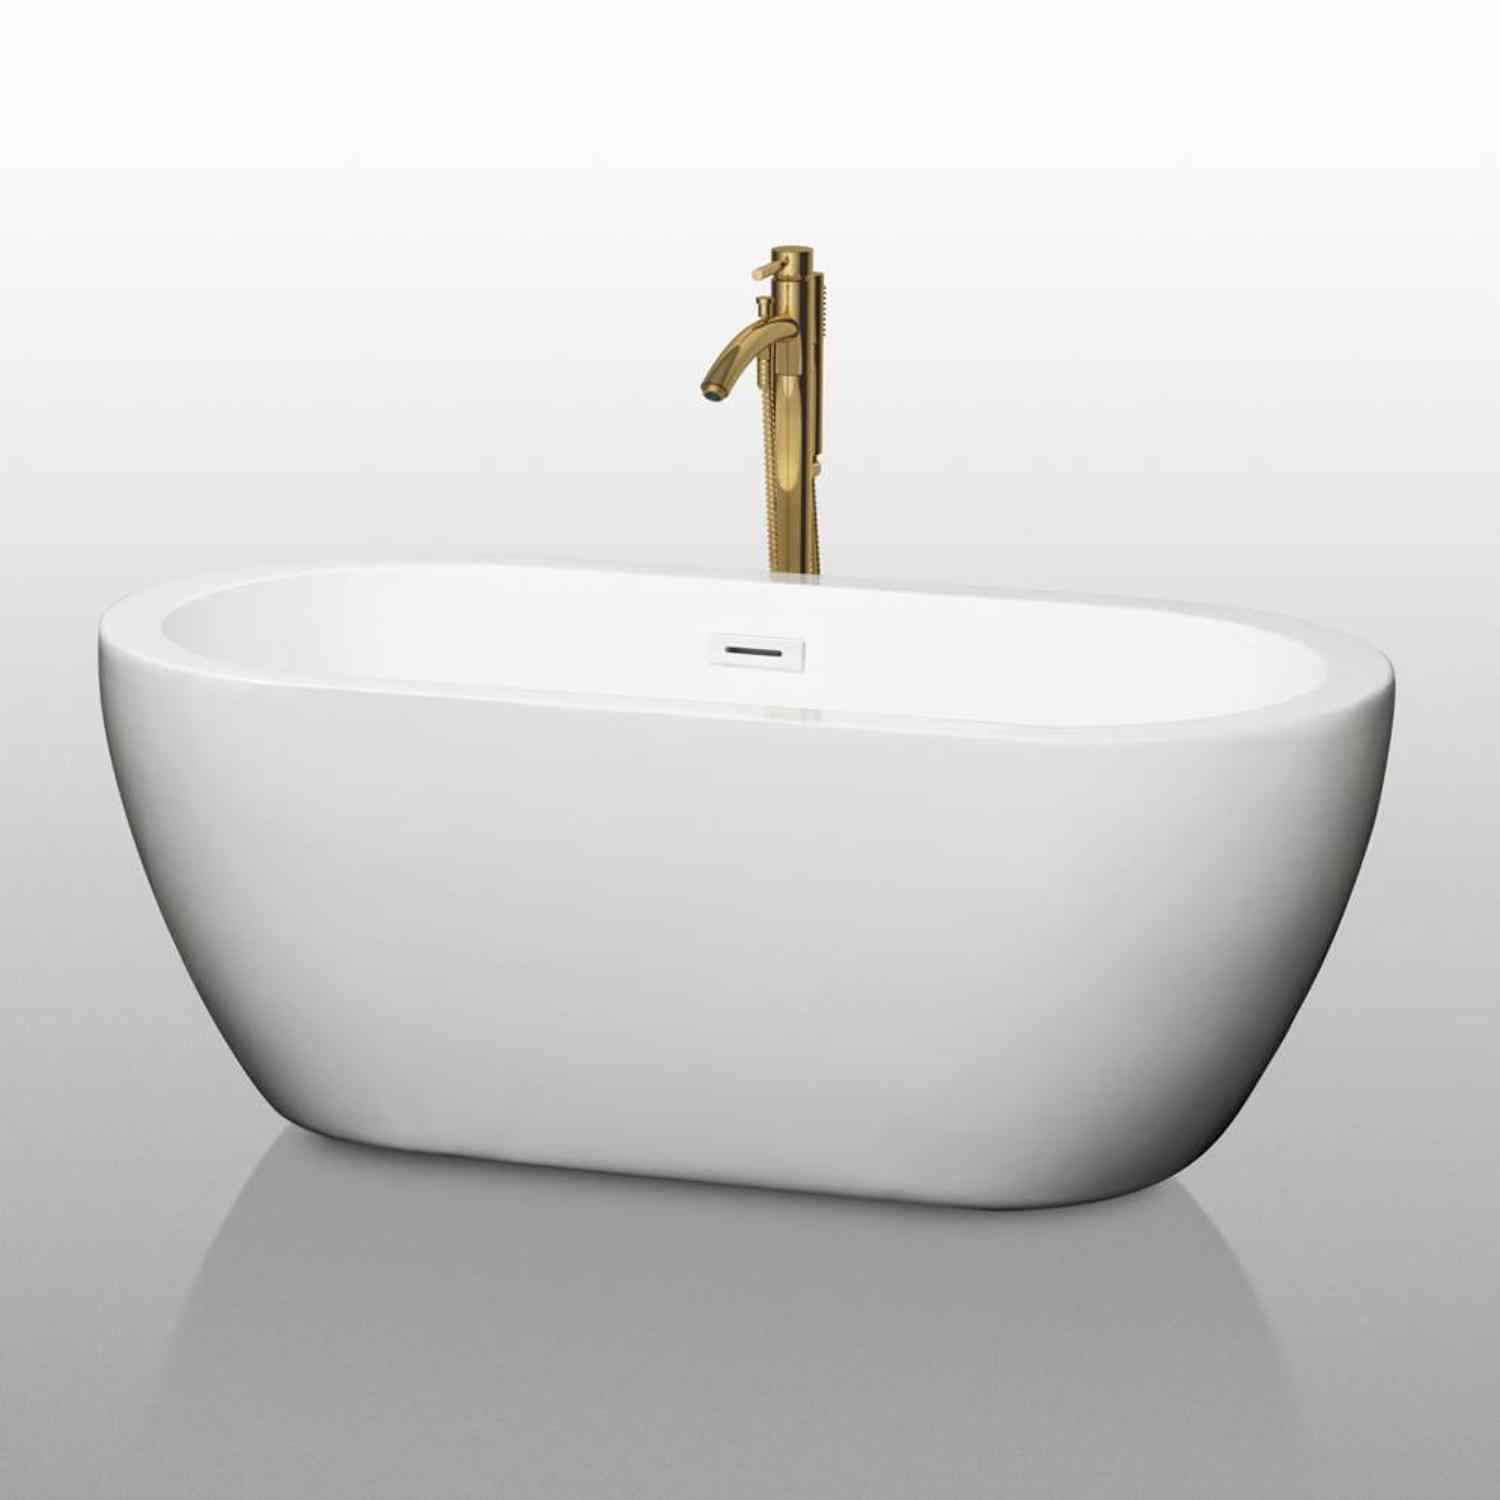 Wyndham collection Soho 60 Inch Freestanding Bathtub in White golden fuchet